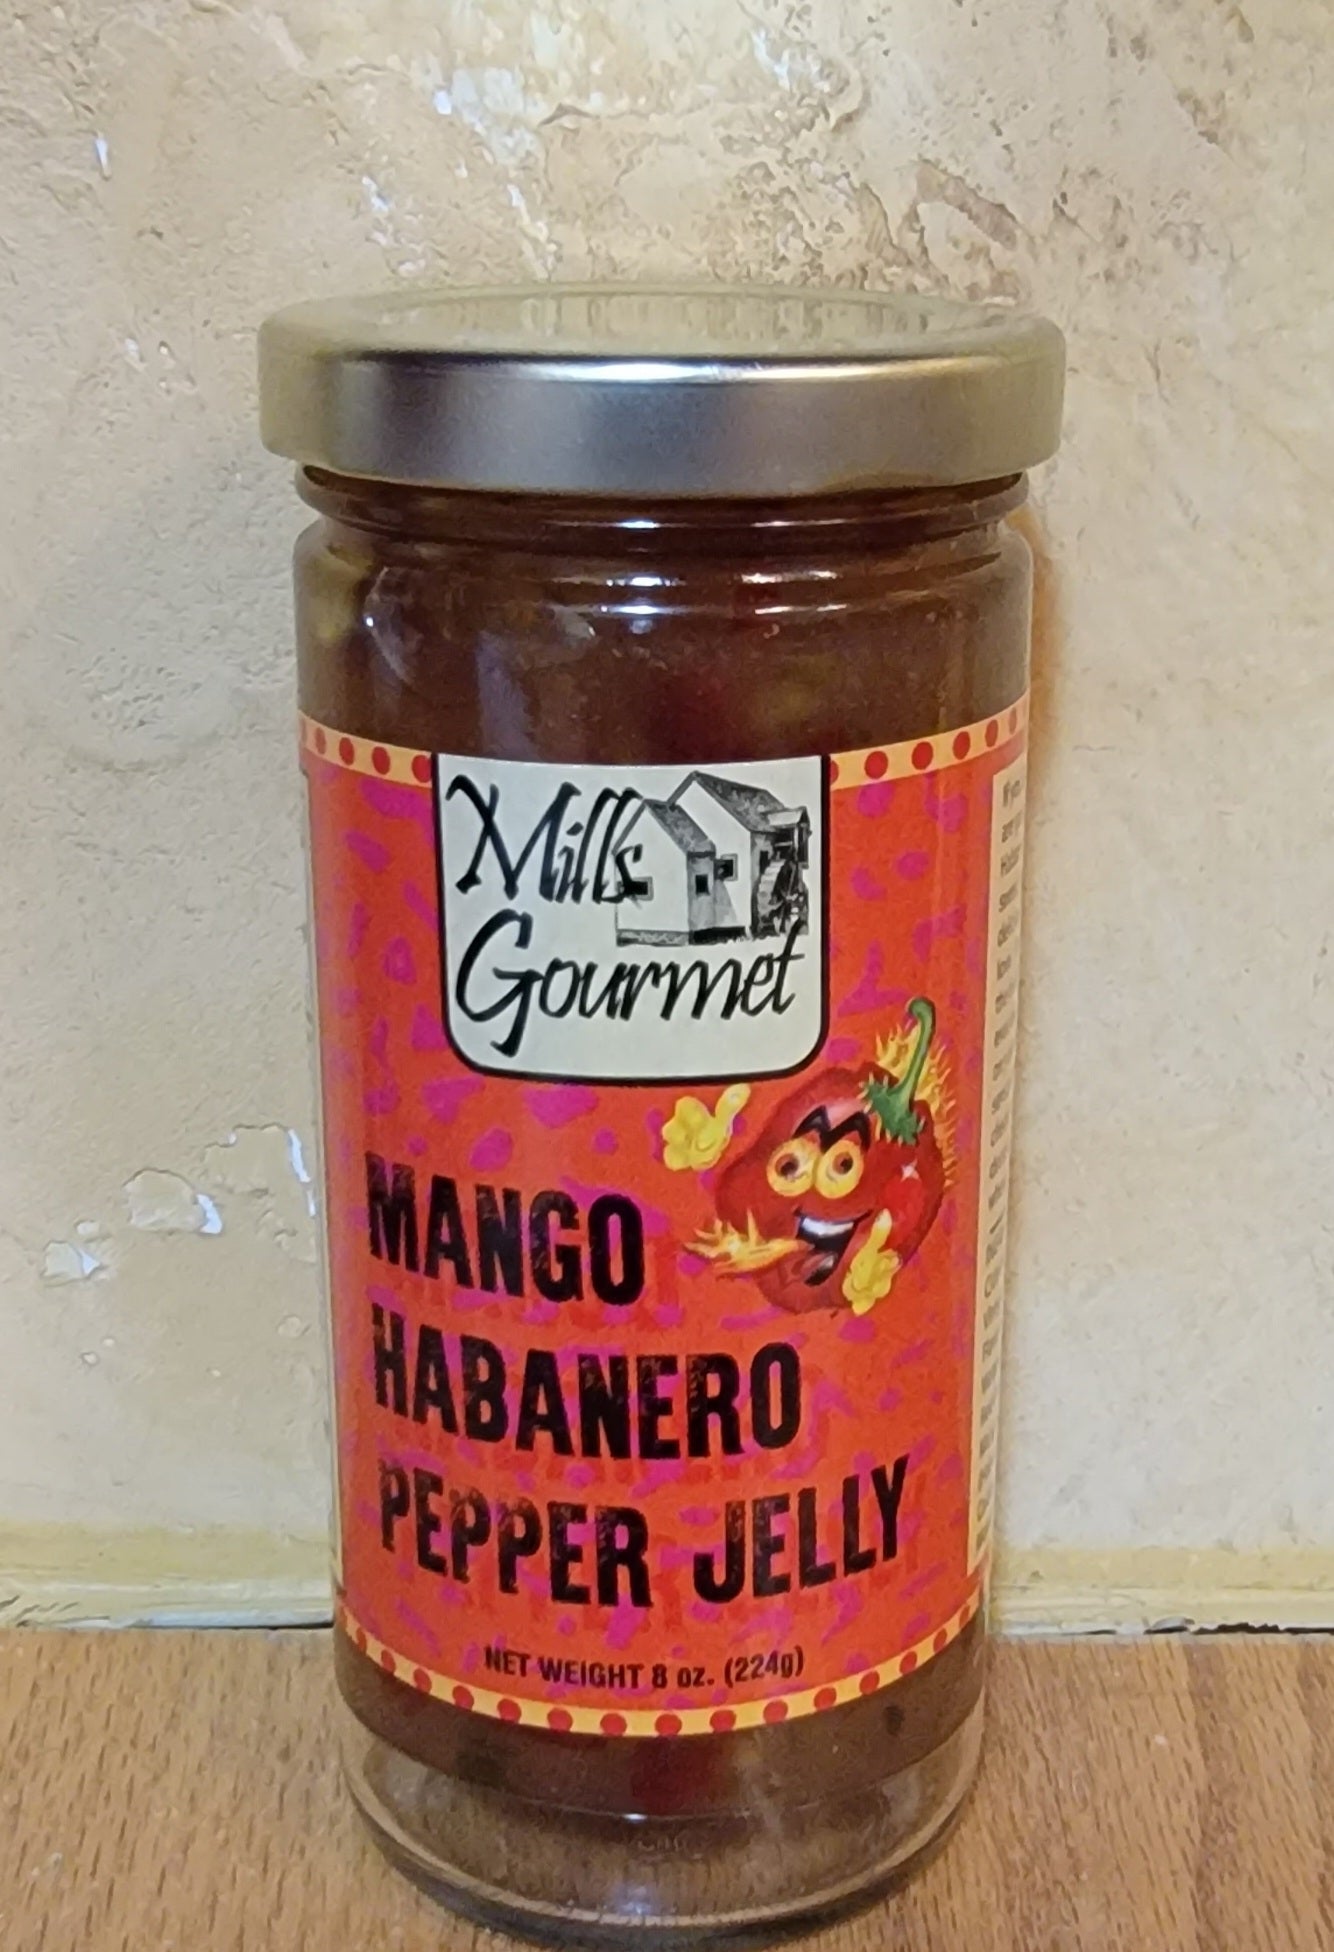 Mills Gourmet Mango Habanero Pepper Jelly